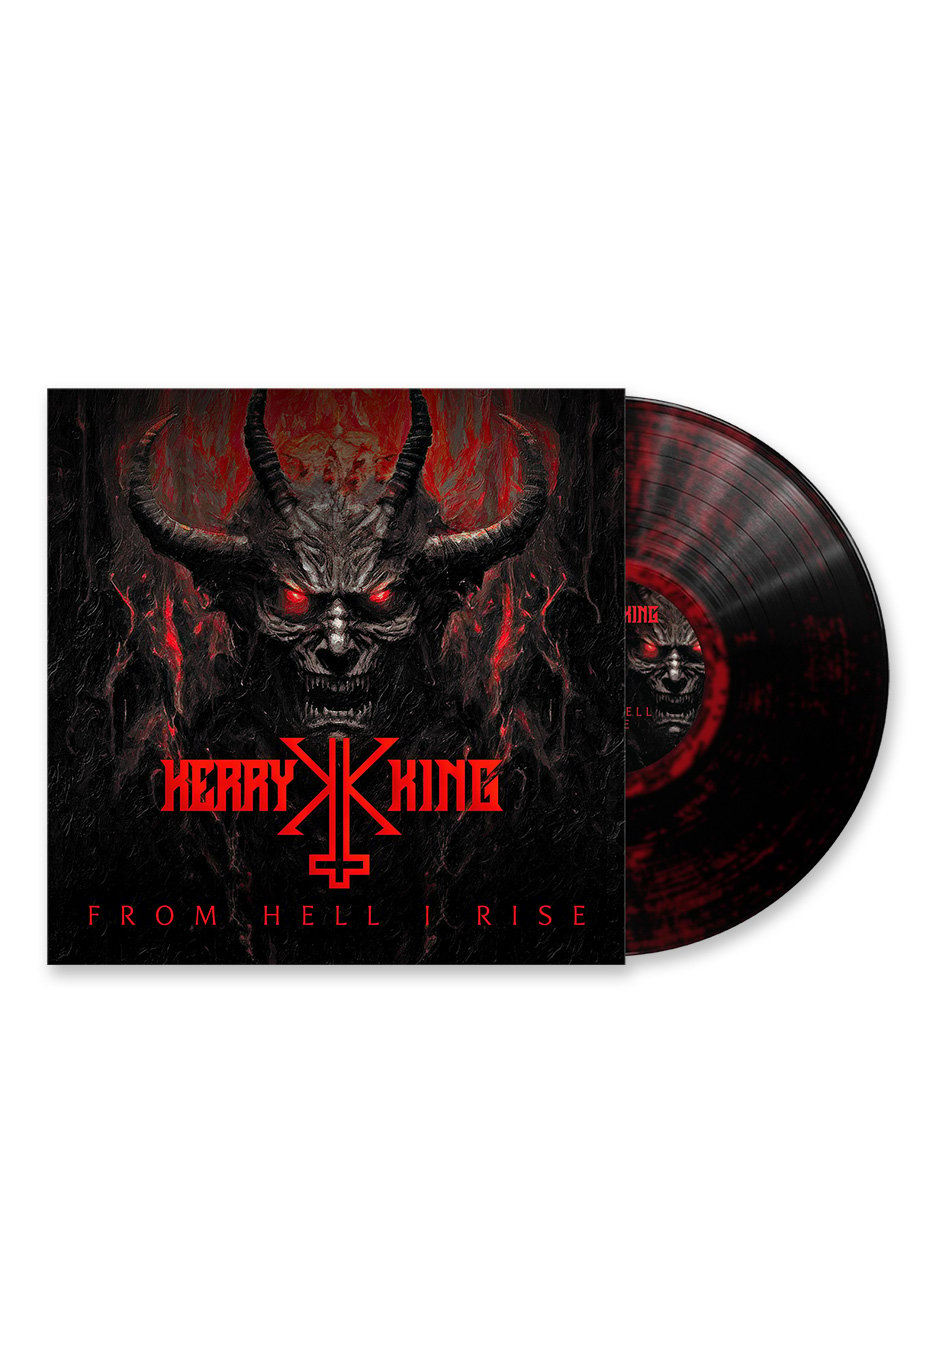 Kerry King - From Hell I Rise Ltd. Black/Dark Red - Marbled Vinyl